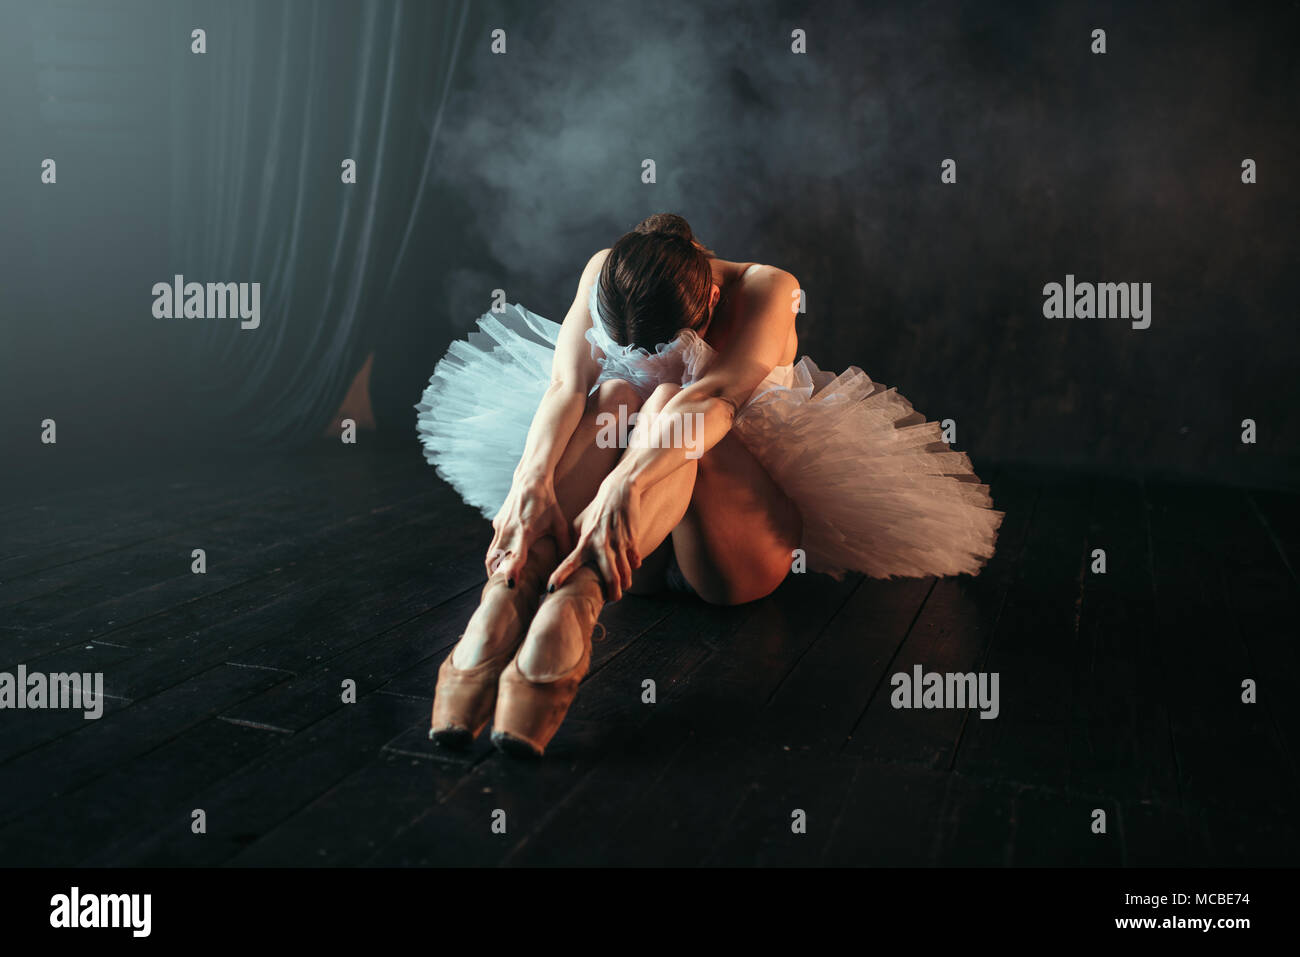 Ballet performer sits on floor, body flexibility Stock Photo